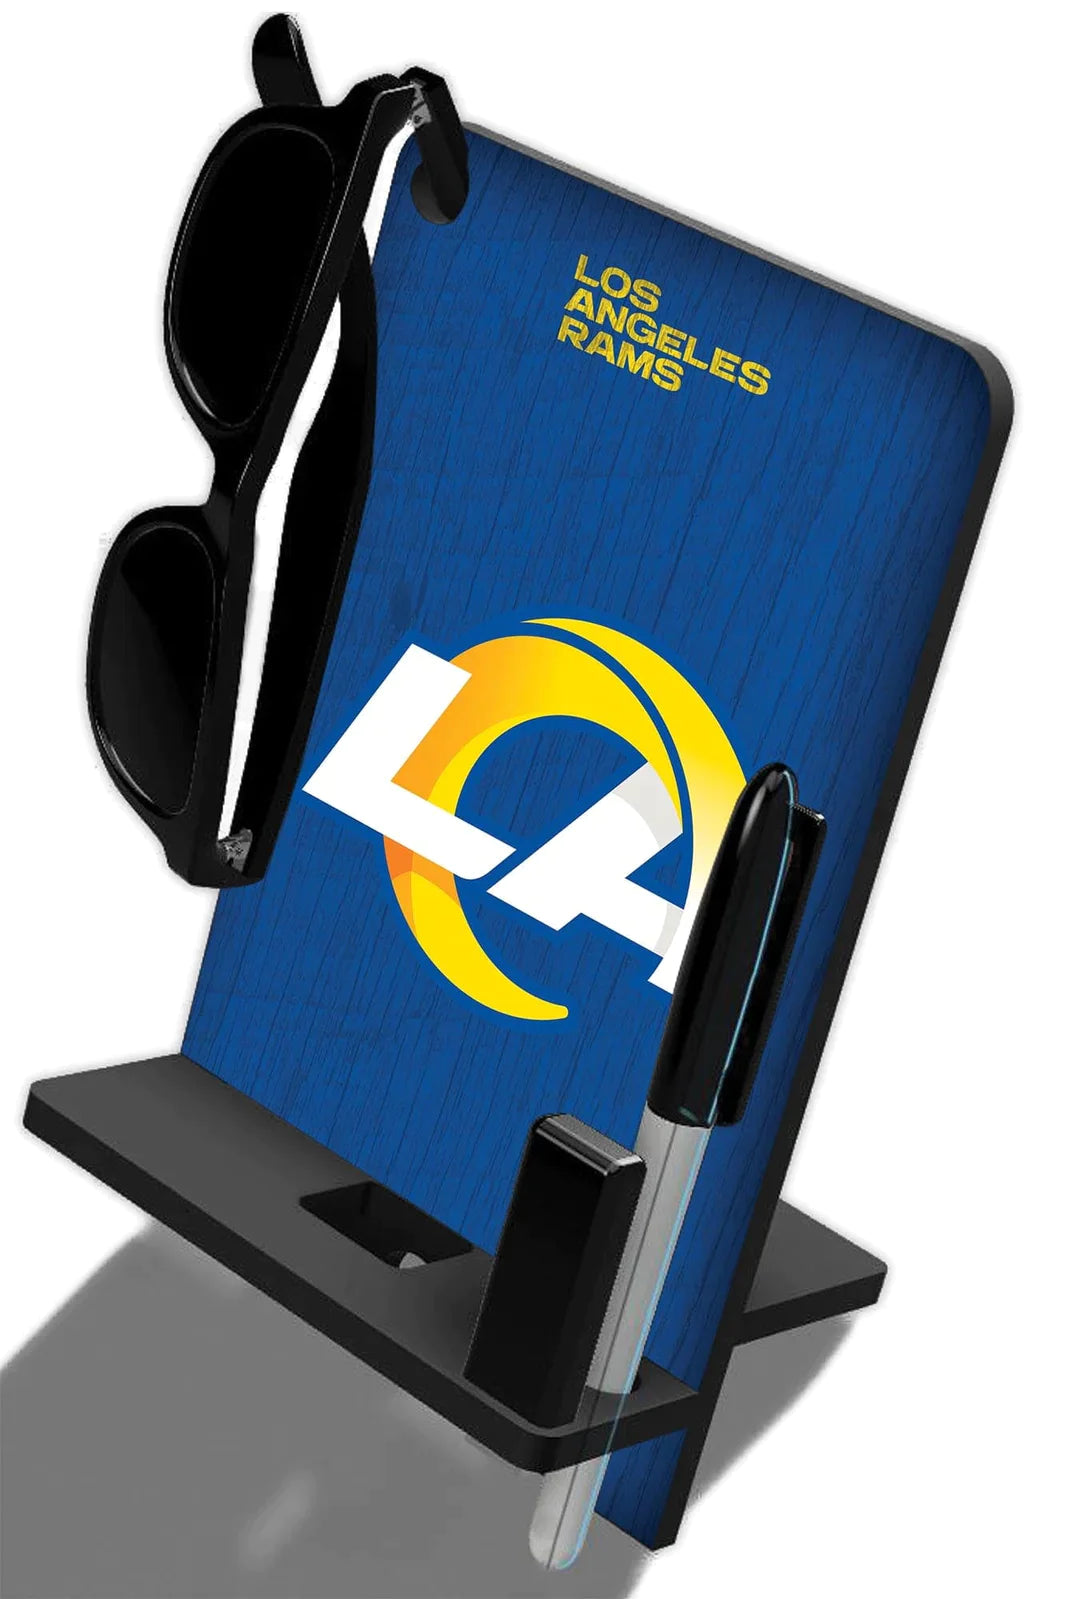 Base de escritorio para Celular Phone Stand NFL Rams